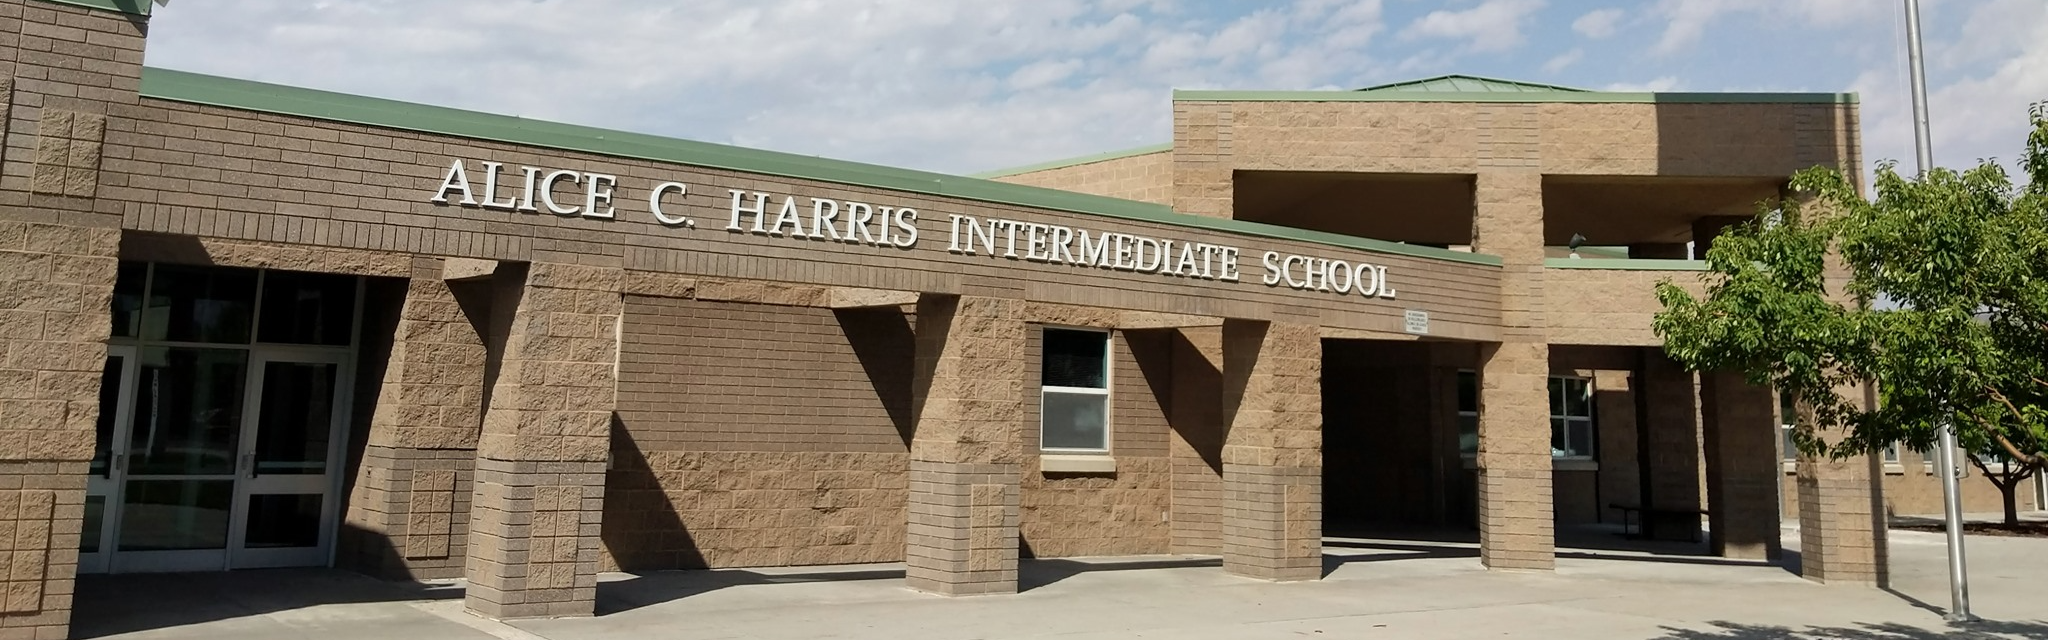 Alice C. Harris Intermediate School Building